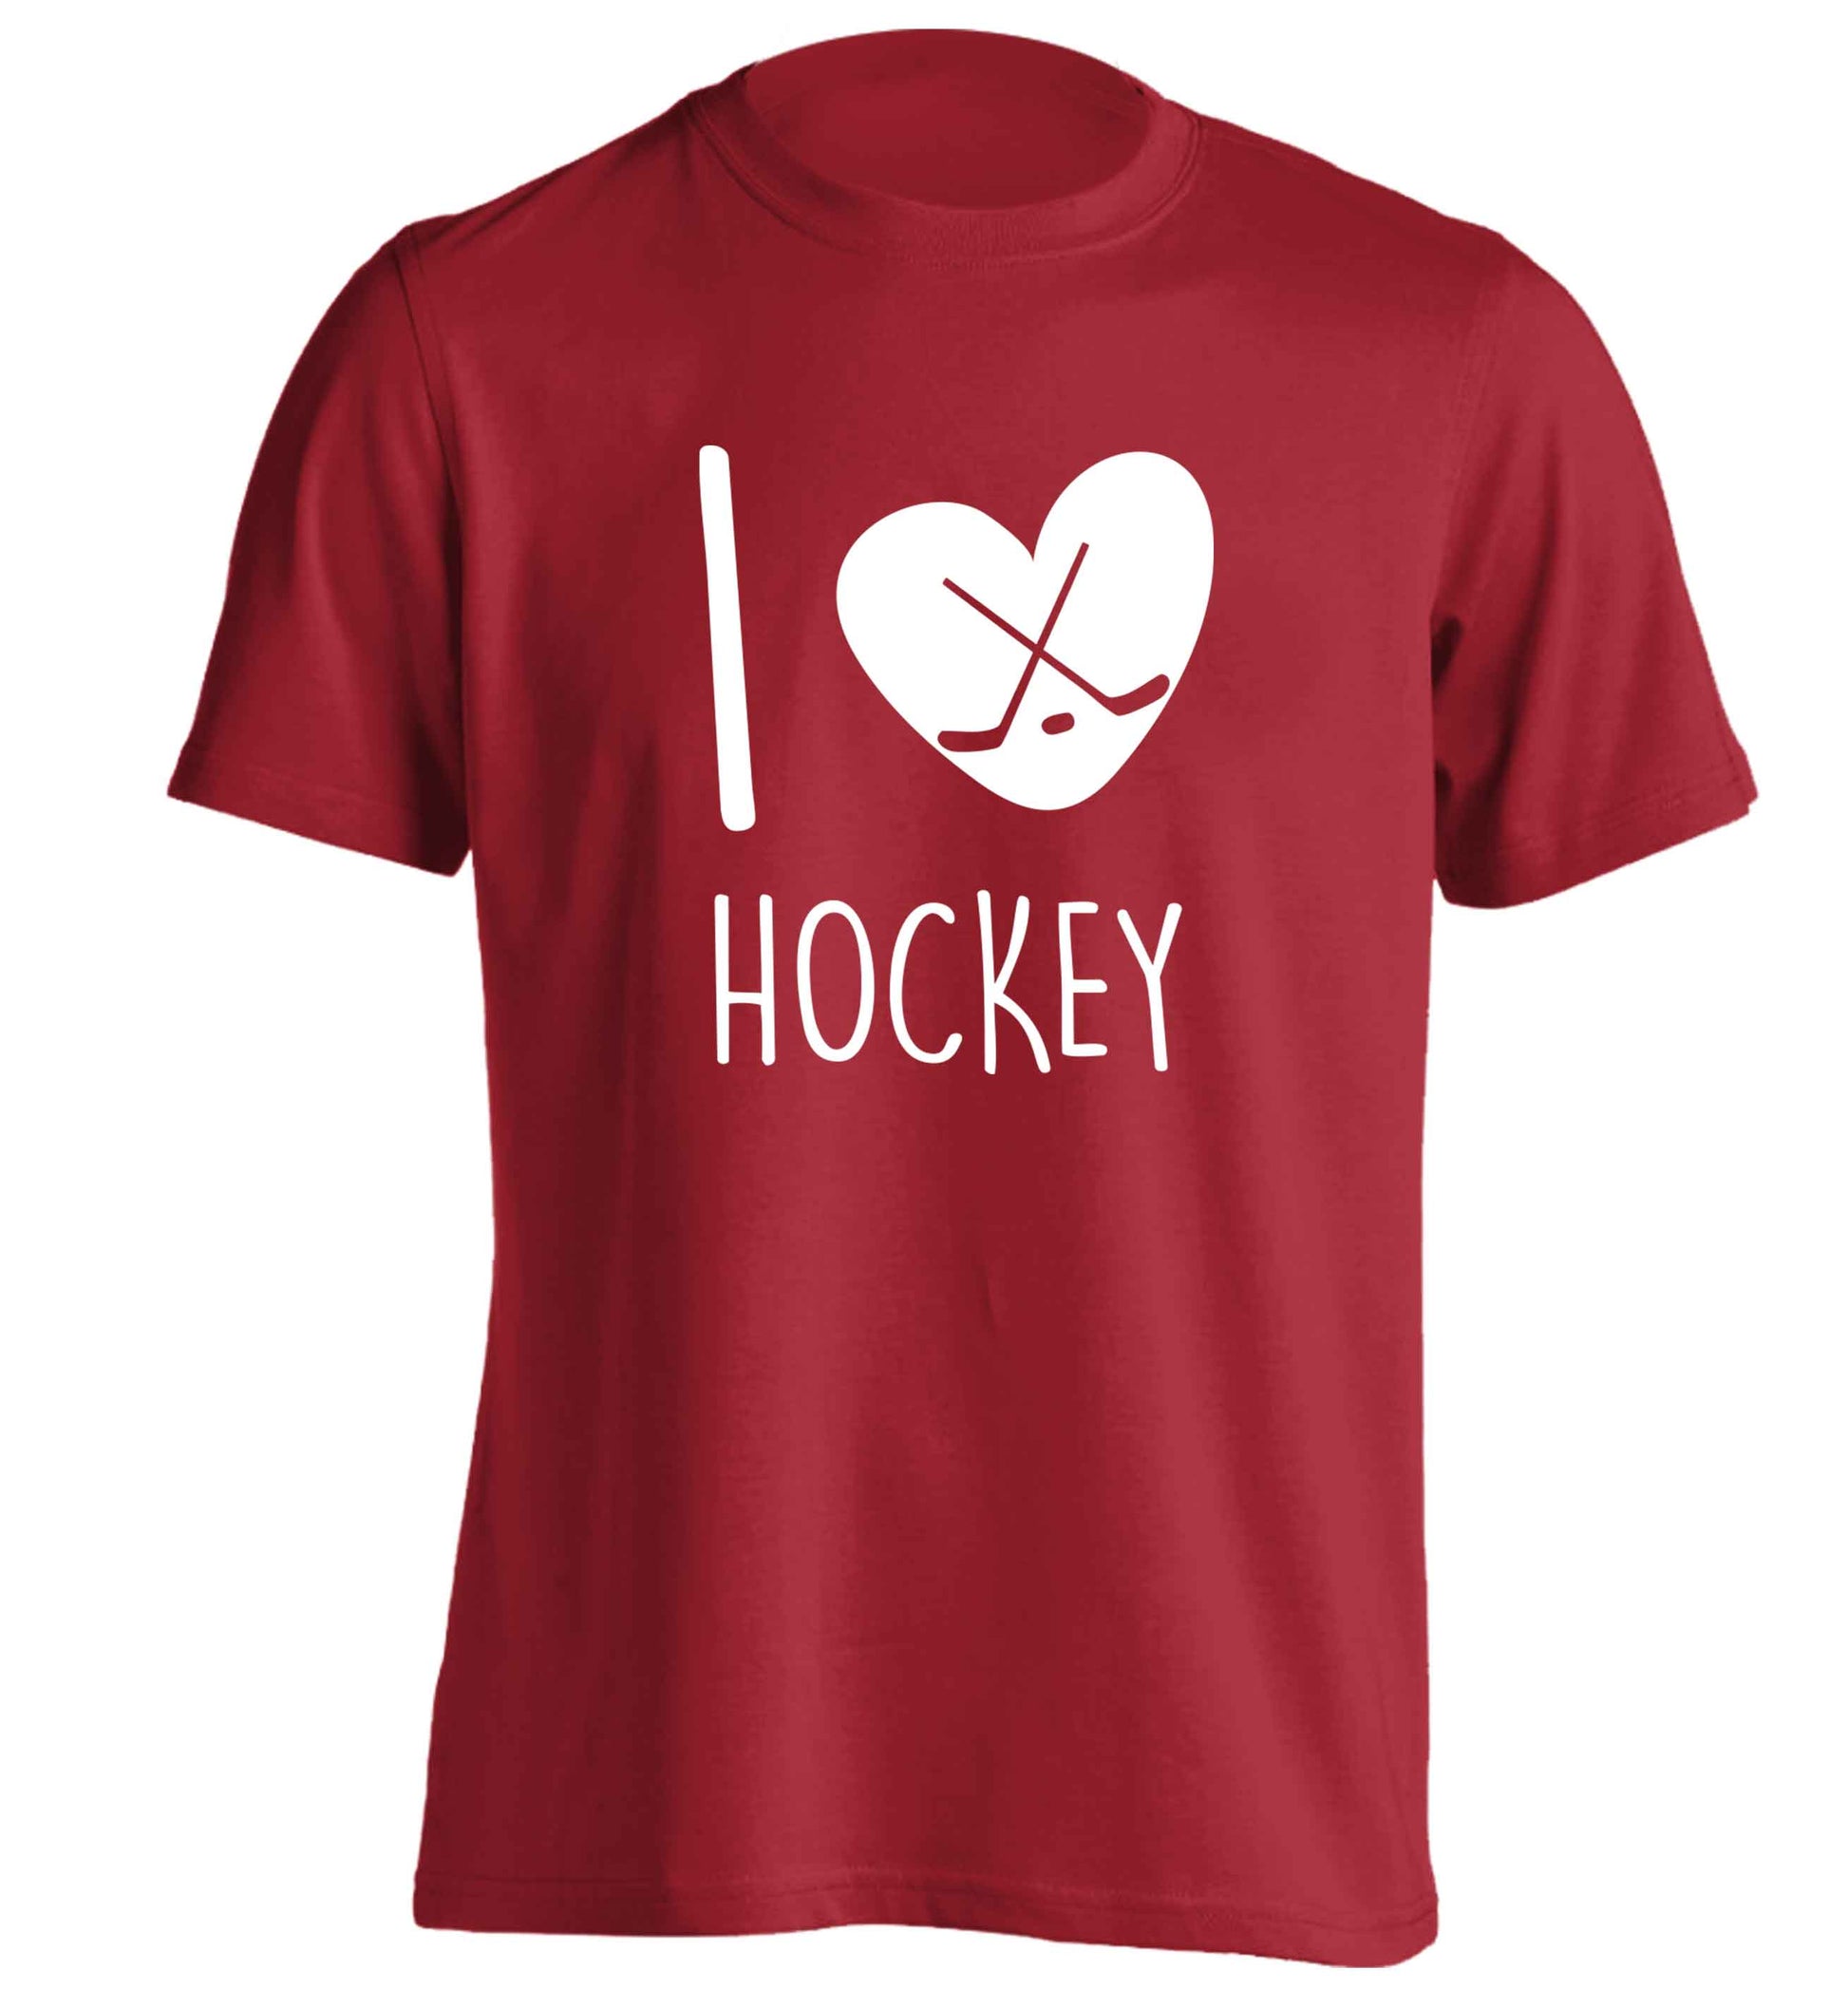 I love hockey adults unisex red Tshirt 2XL